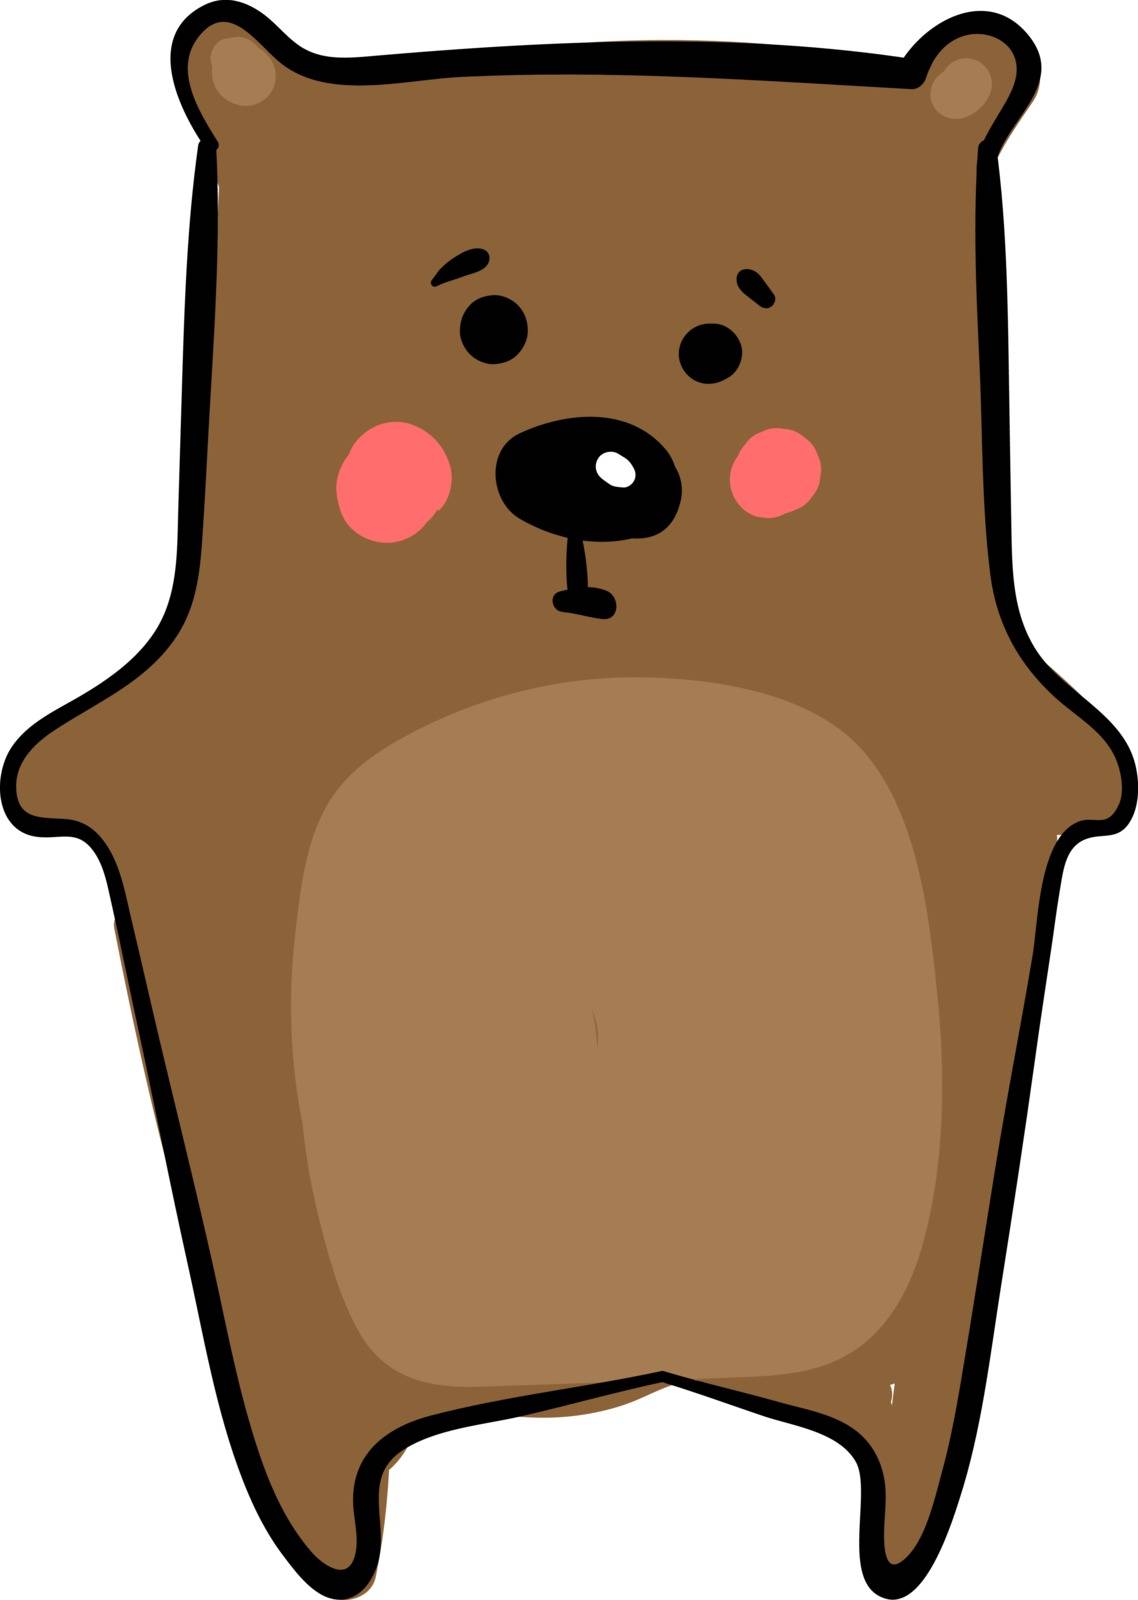 Sad little bear, illustration, vector on white background.